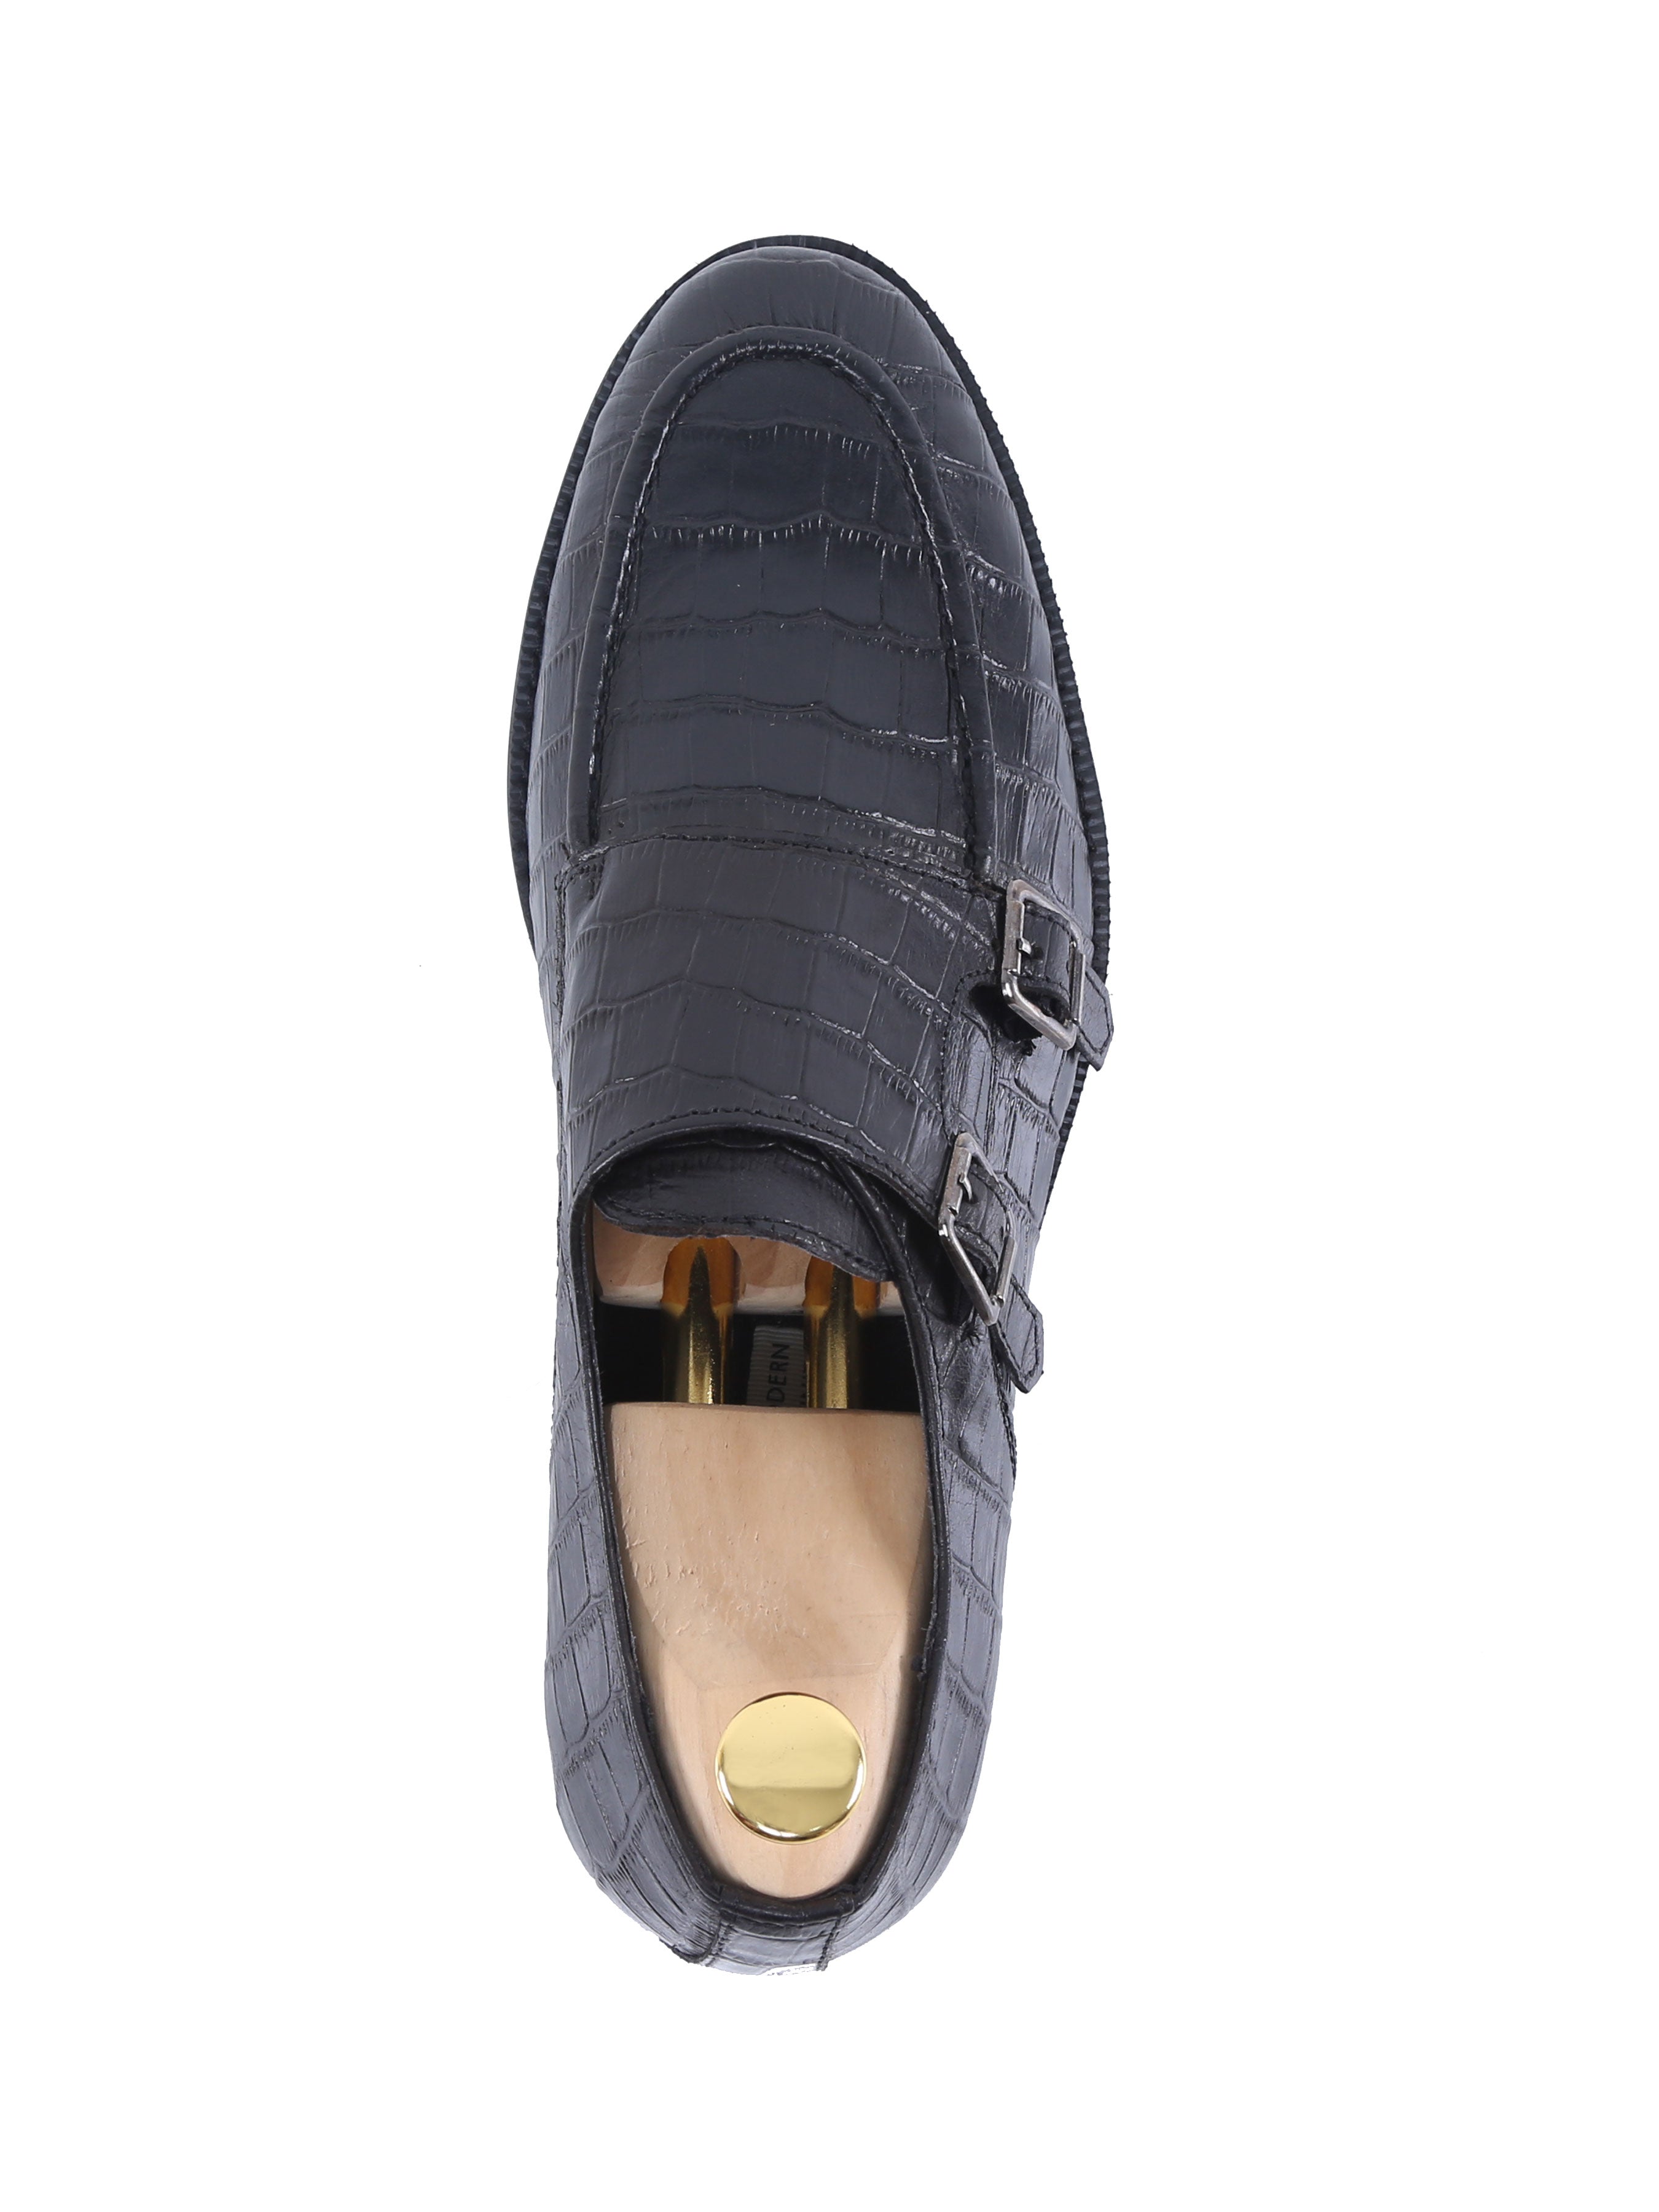 Double Monk Strap - Black Croco Leather (Crepe Sole) - Zeve Shoes